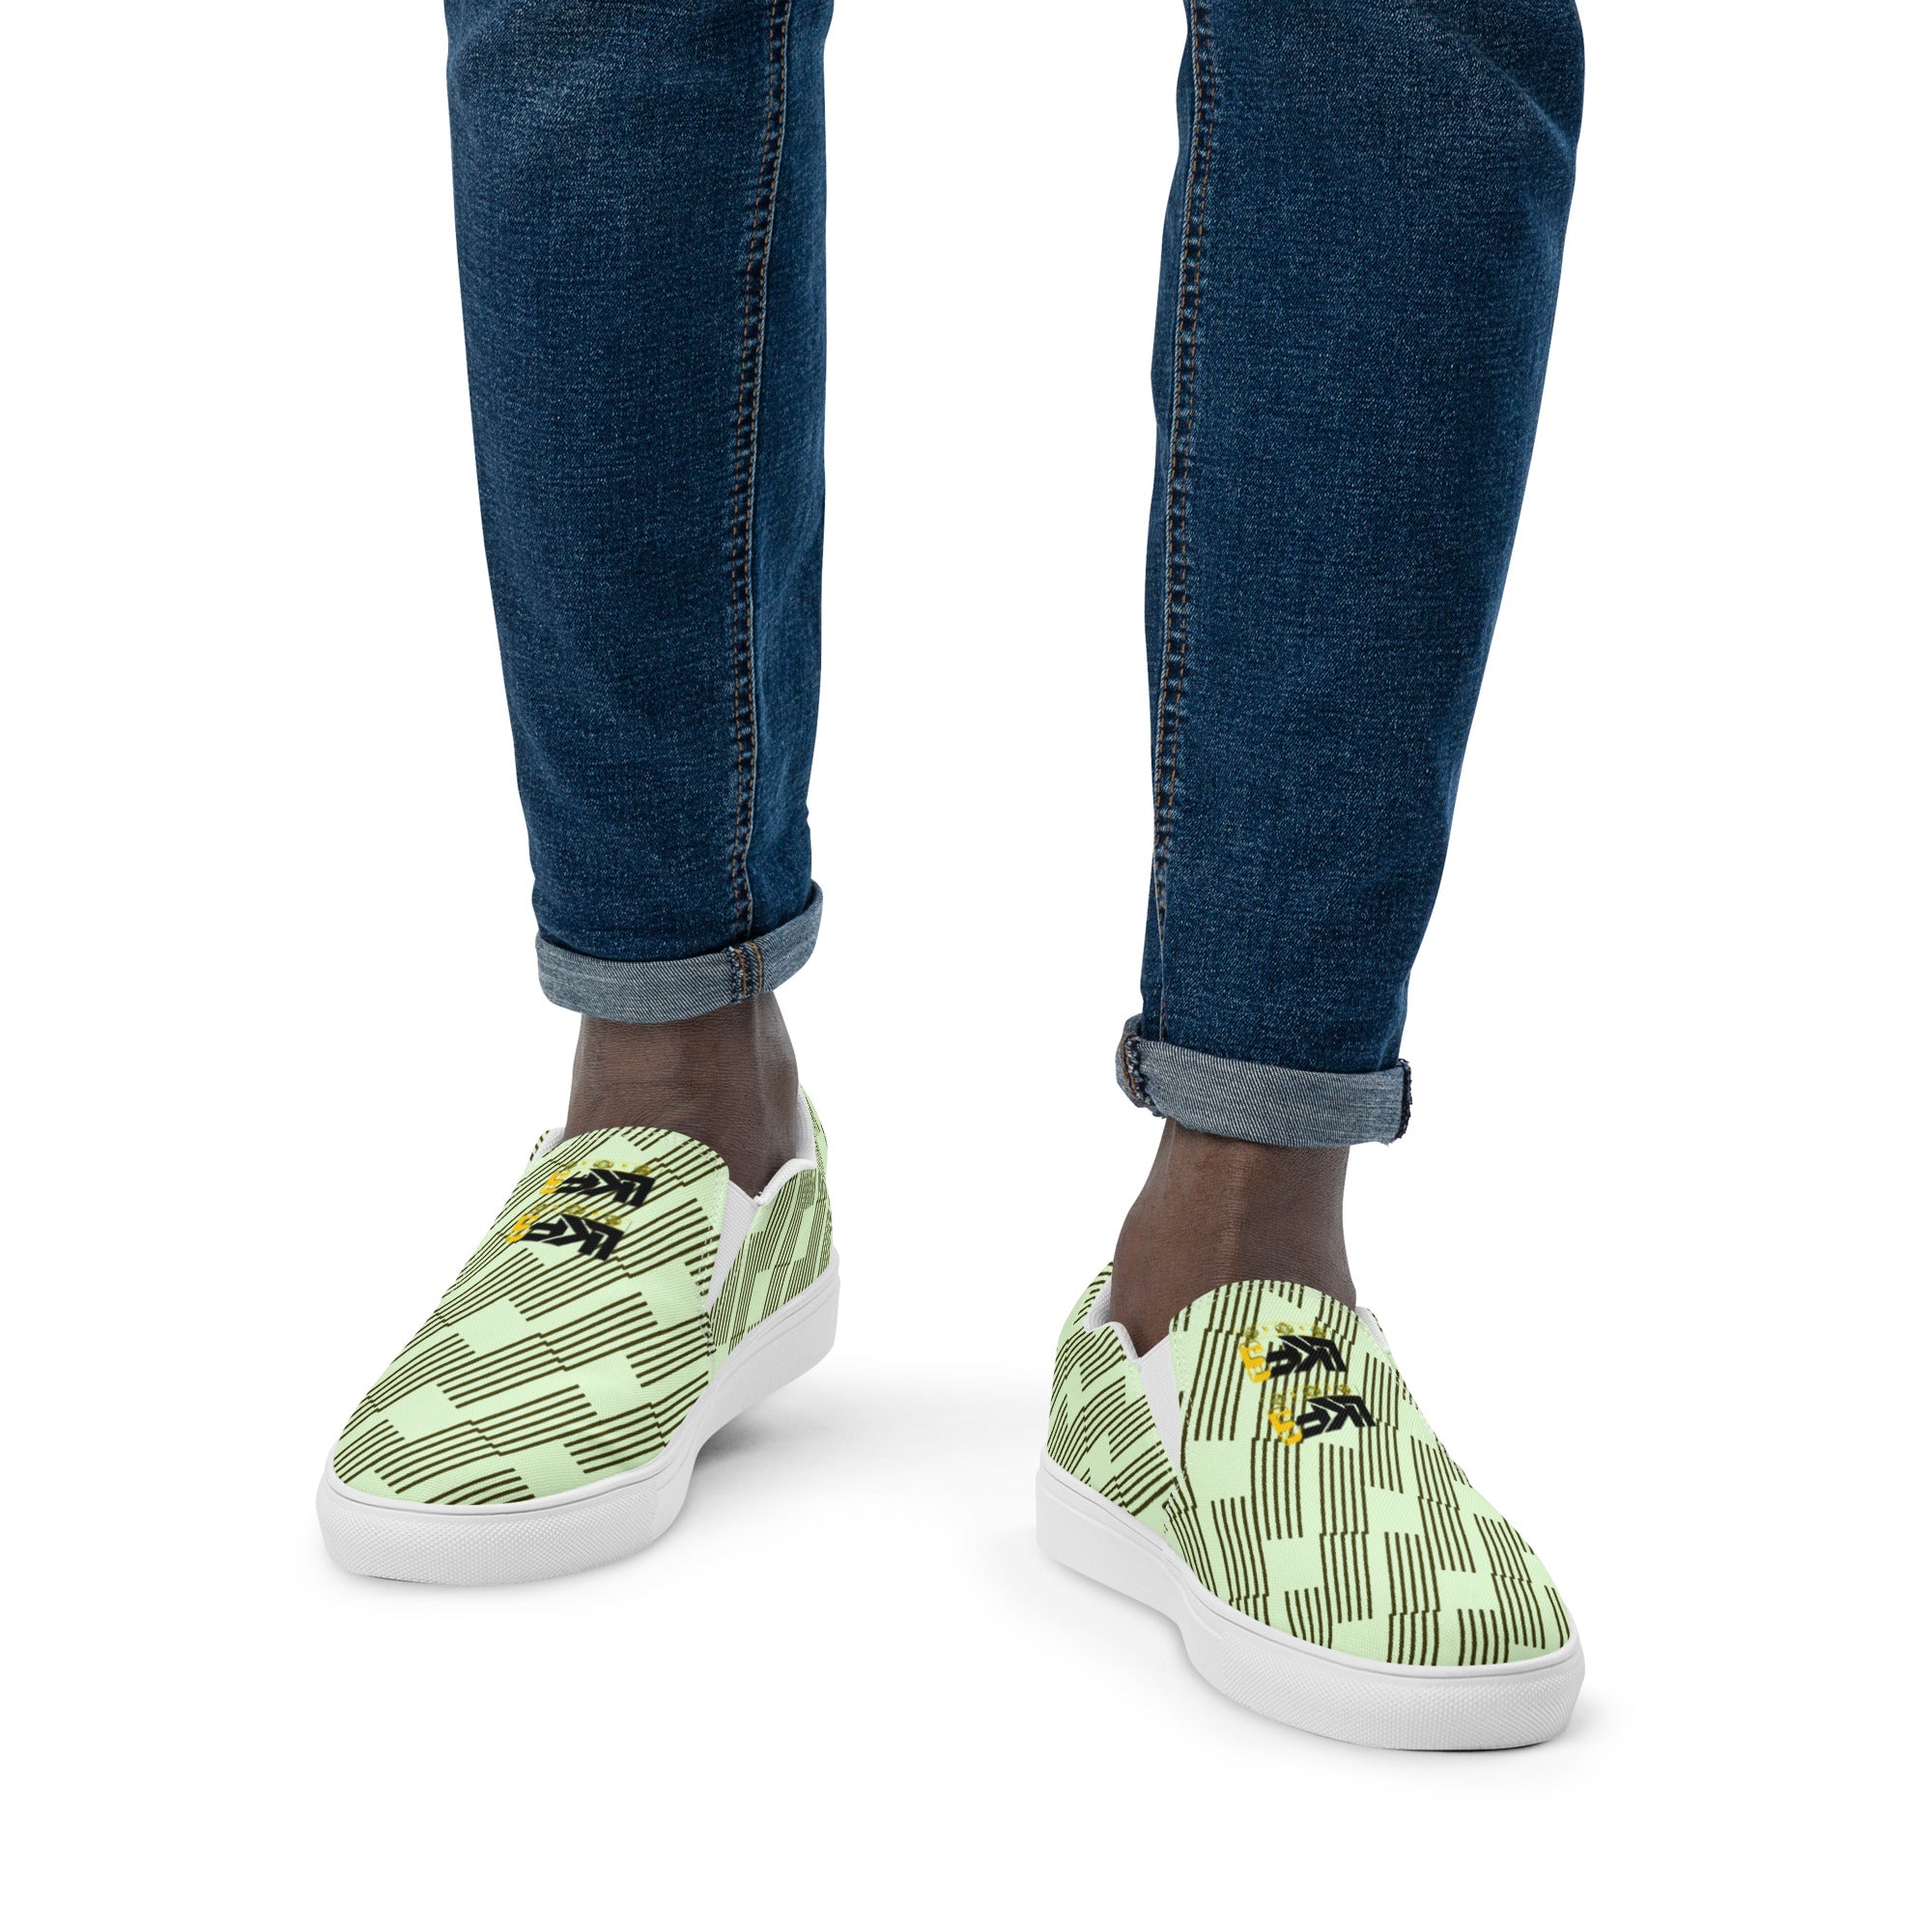 Men’s slip-on green lkf9 shoes